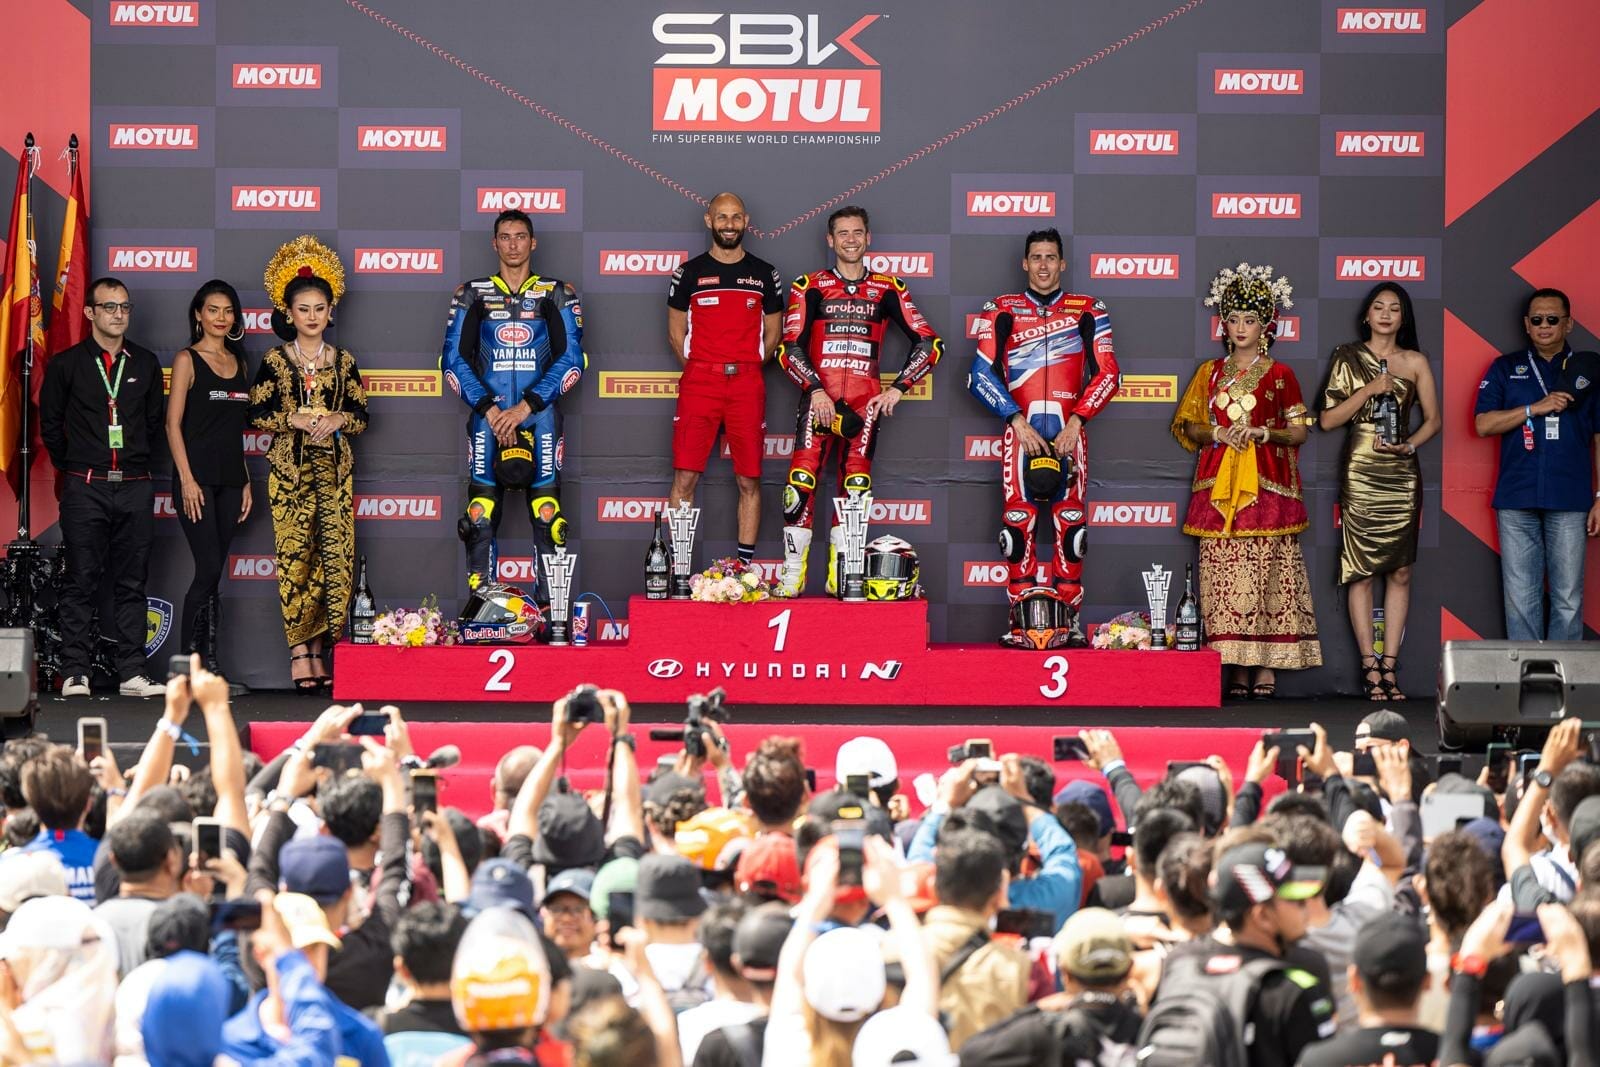 World Superbike Championship in Indonesia: Alvaro Bautista also wins 2nd main race